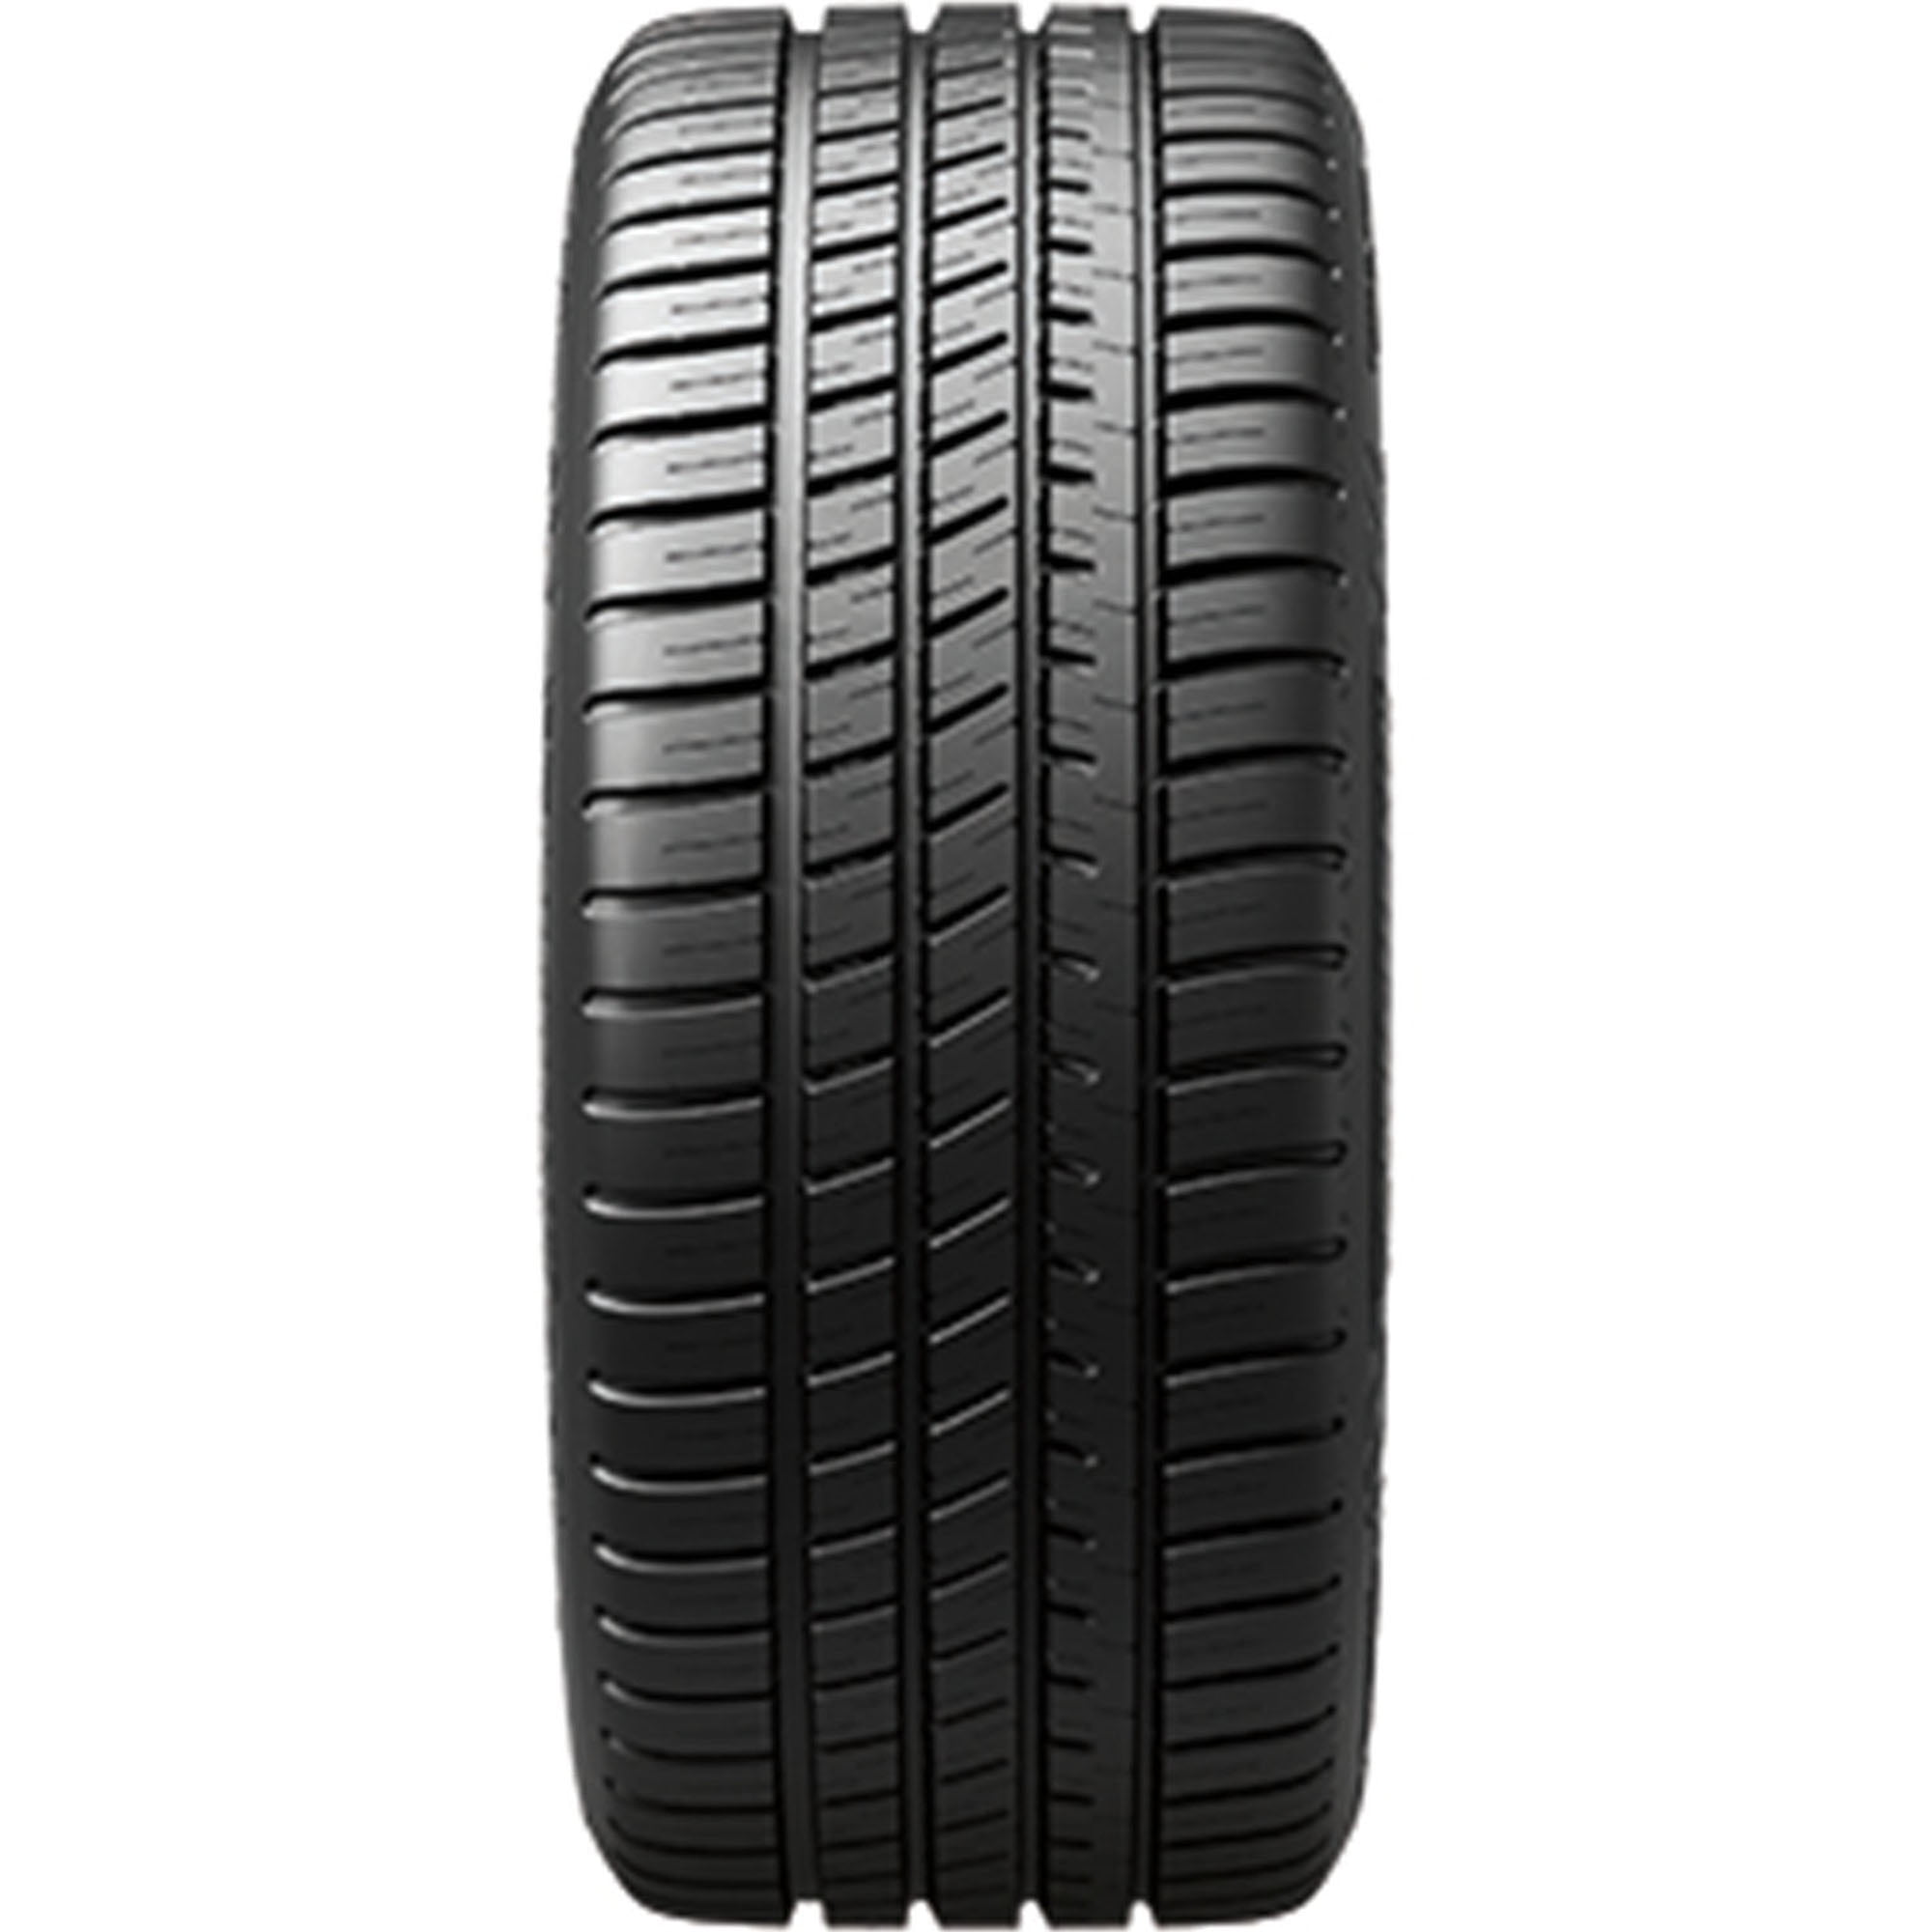 Michelin Pilot All A/S Tire Sport 195/45R16 3+ UHP XL Season Passenger 84V